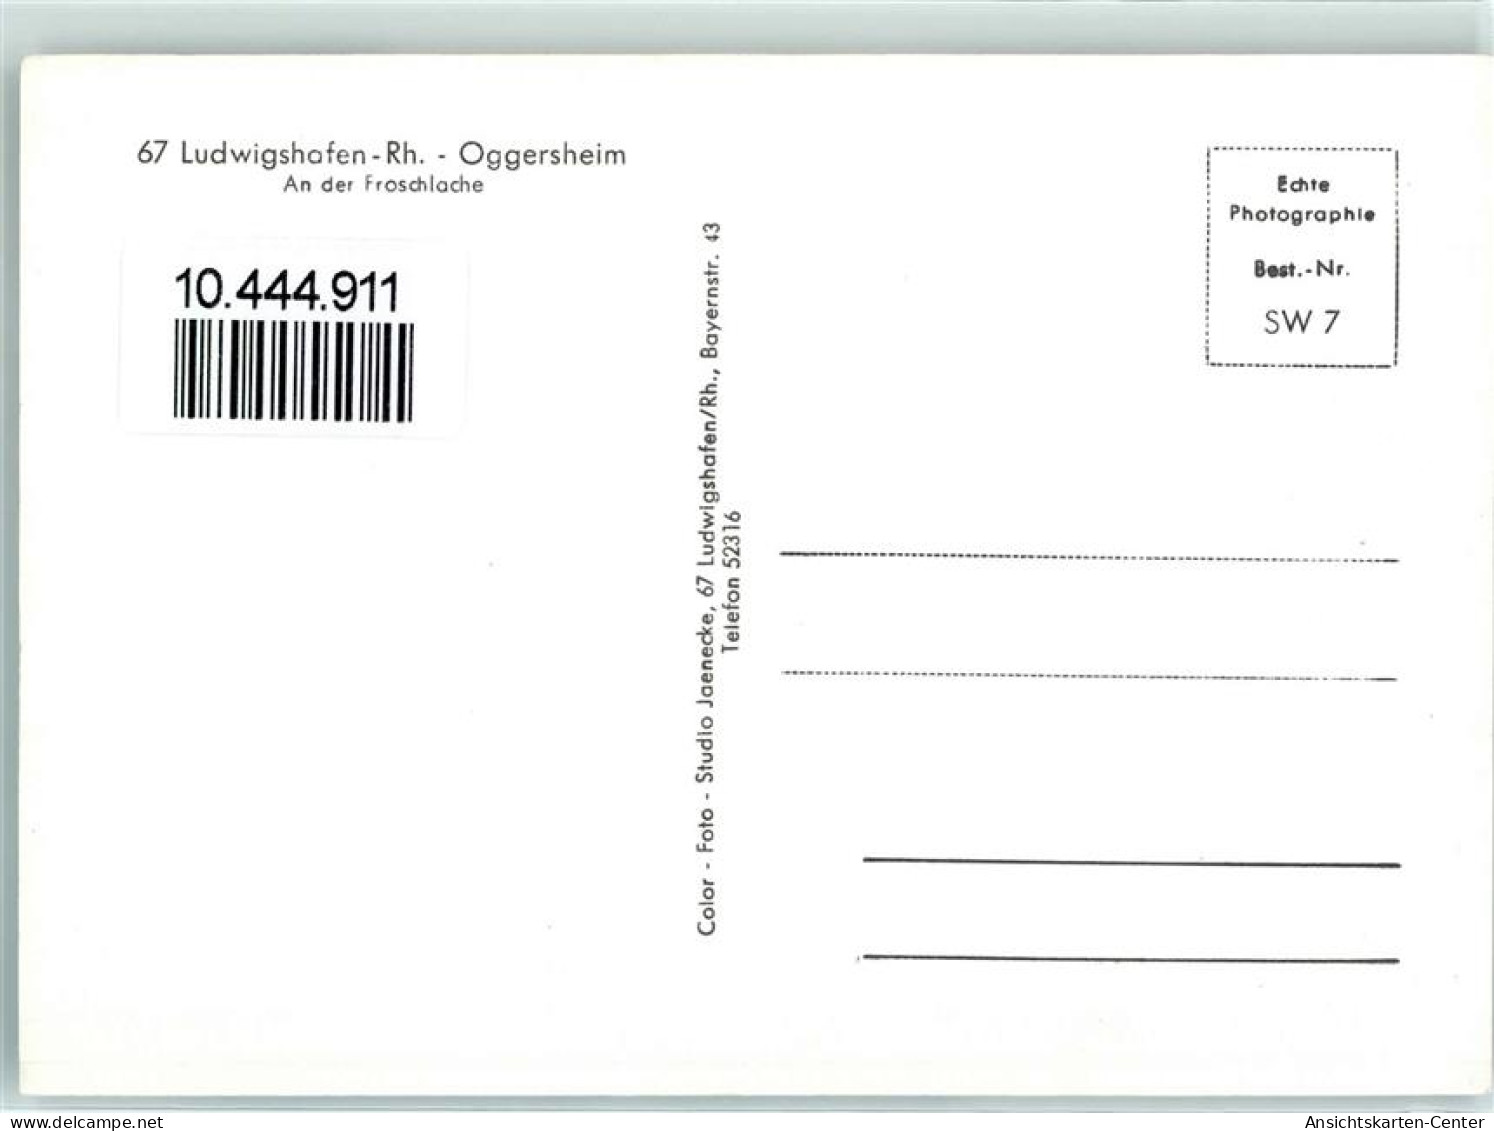 10444911 - Oggersheim - Ludwigshafen